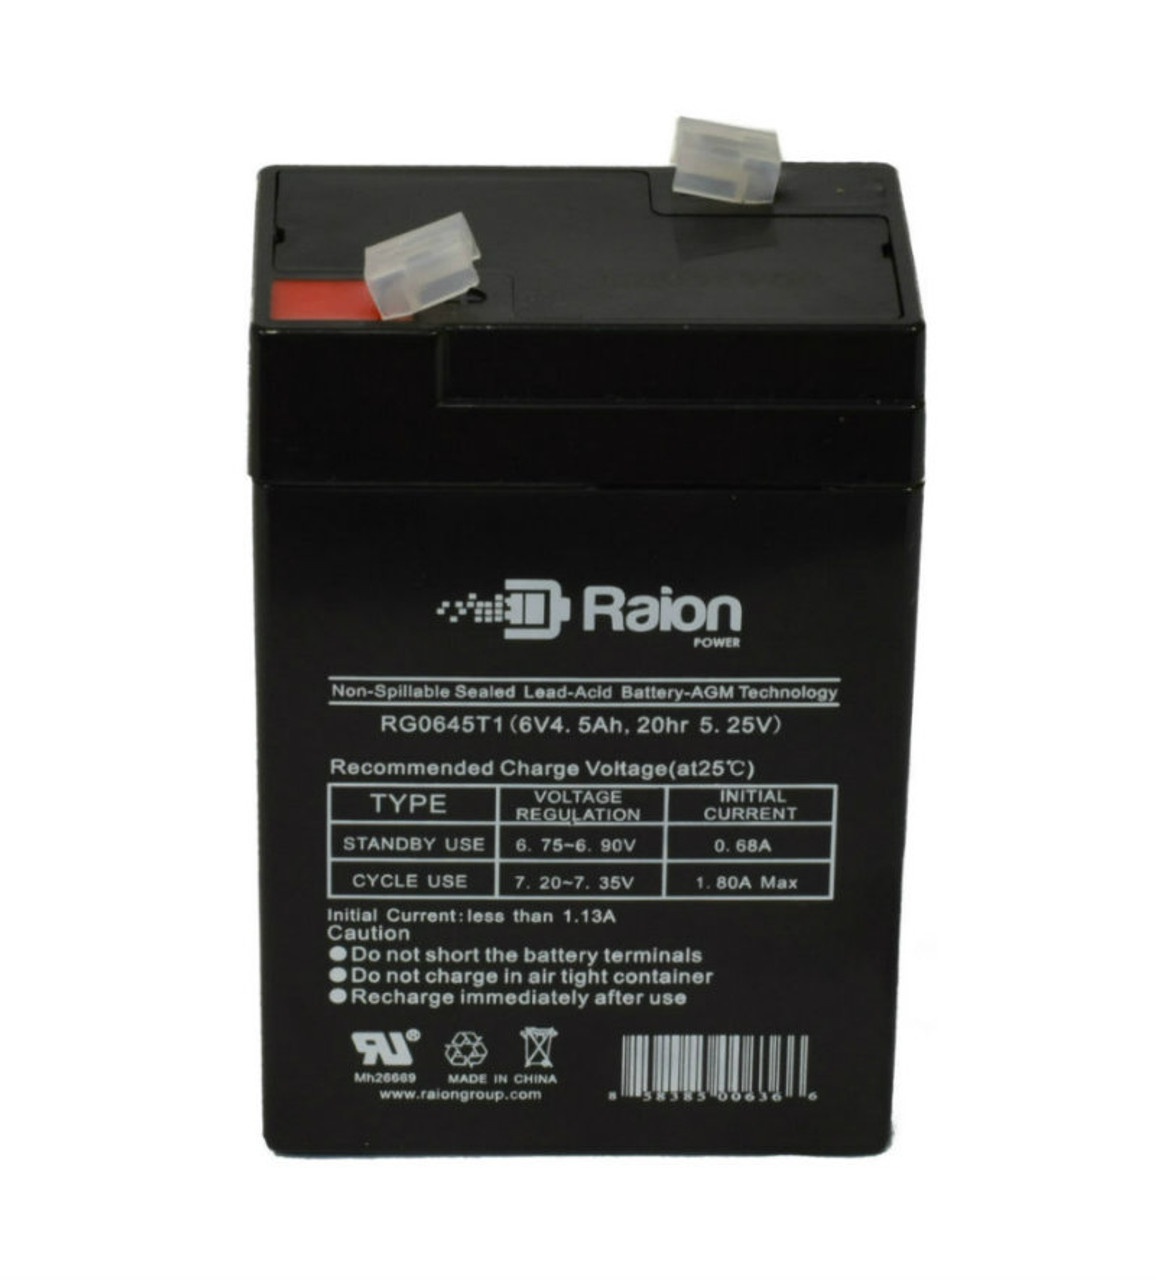 Raion Power RG0645T1 Replacement Battery Cartridge for Peak Performance PKC0TN